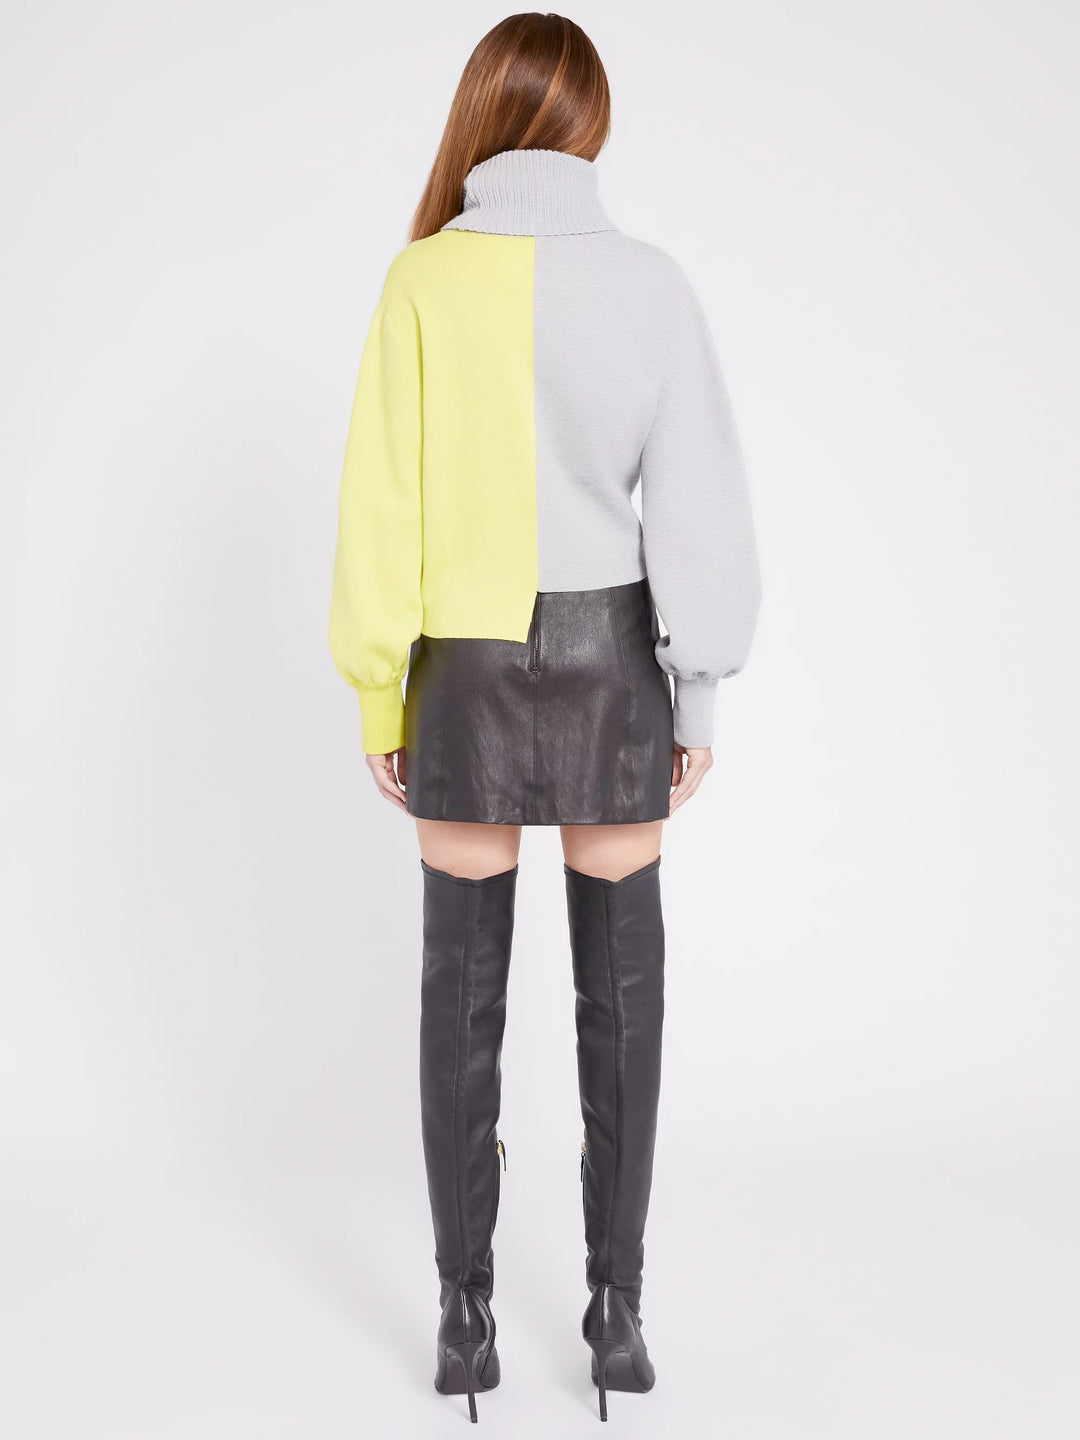 Alice + Olivia - Spencer Colorblock Turtleneck Sweater in Light Heather Grey/Sunny Lime